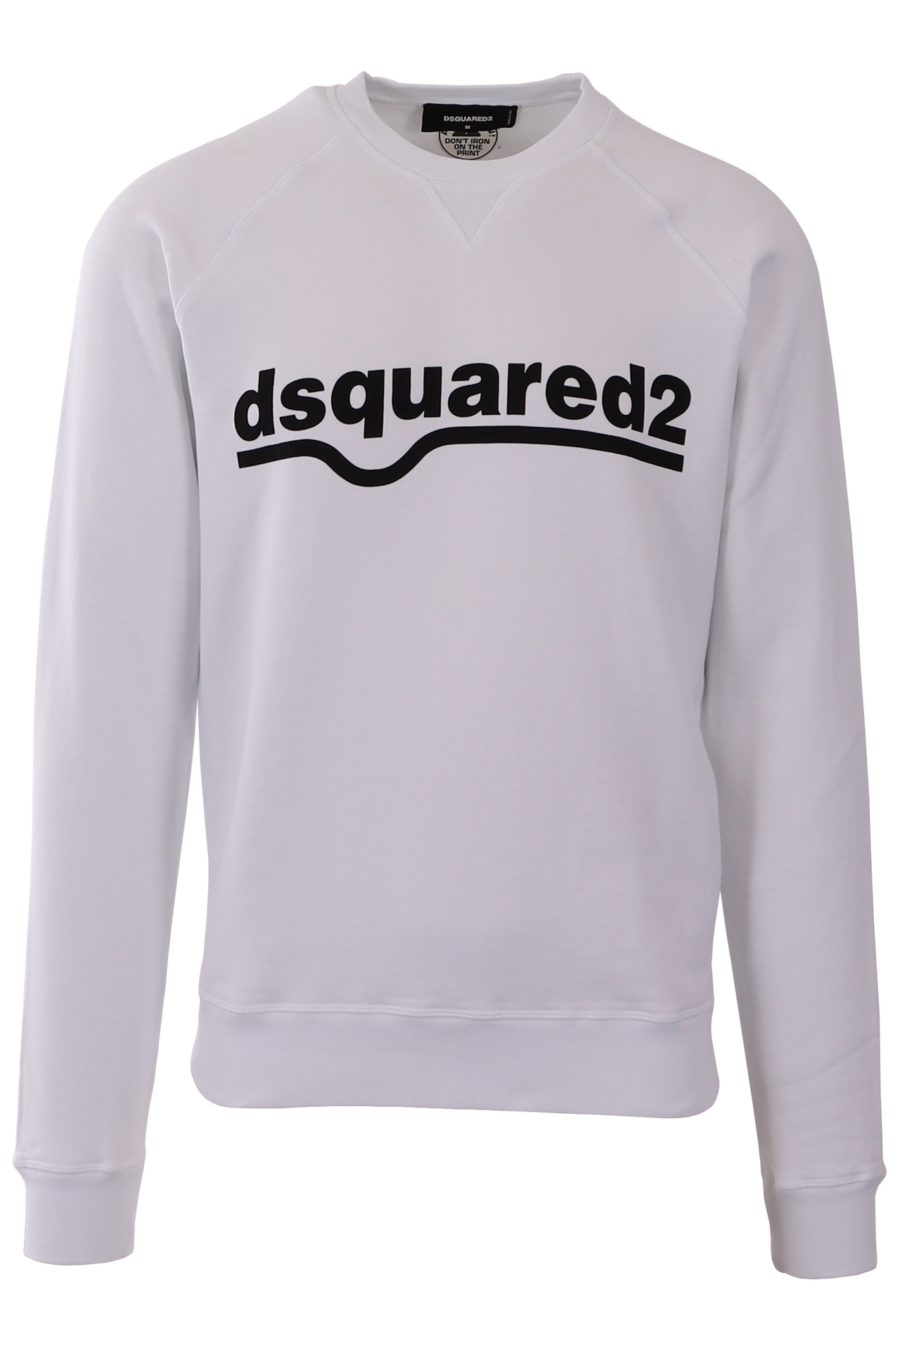 Sweatshirt Dsquared2 white with black logo - e5efea0d9278dc468a7c281fbe7b4fc18a7b0729